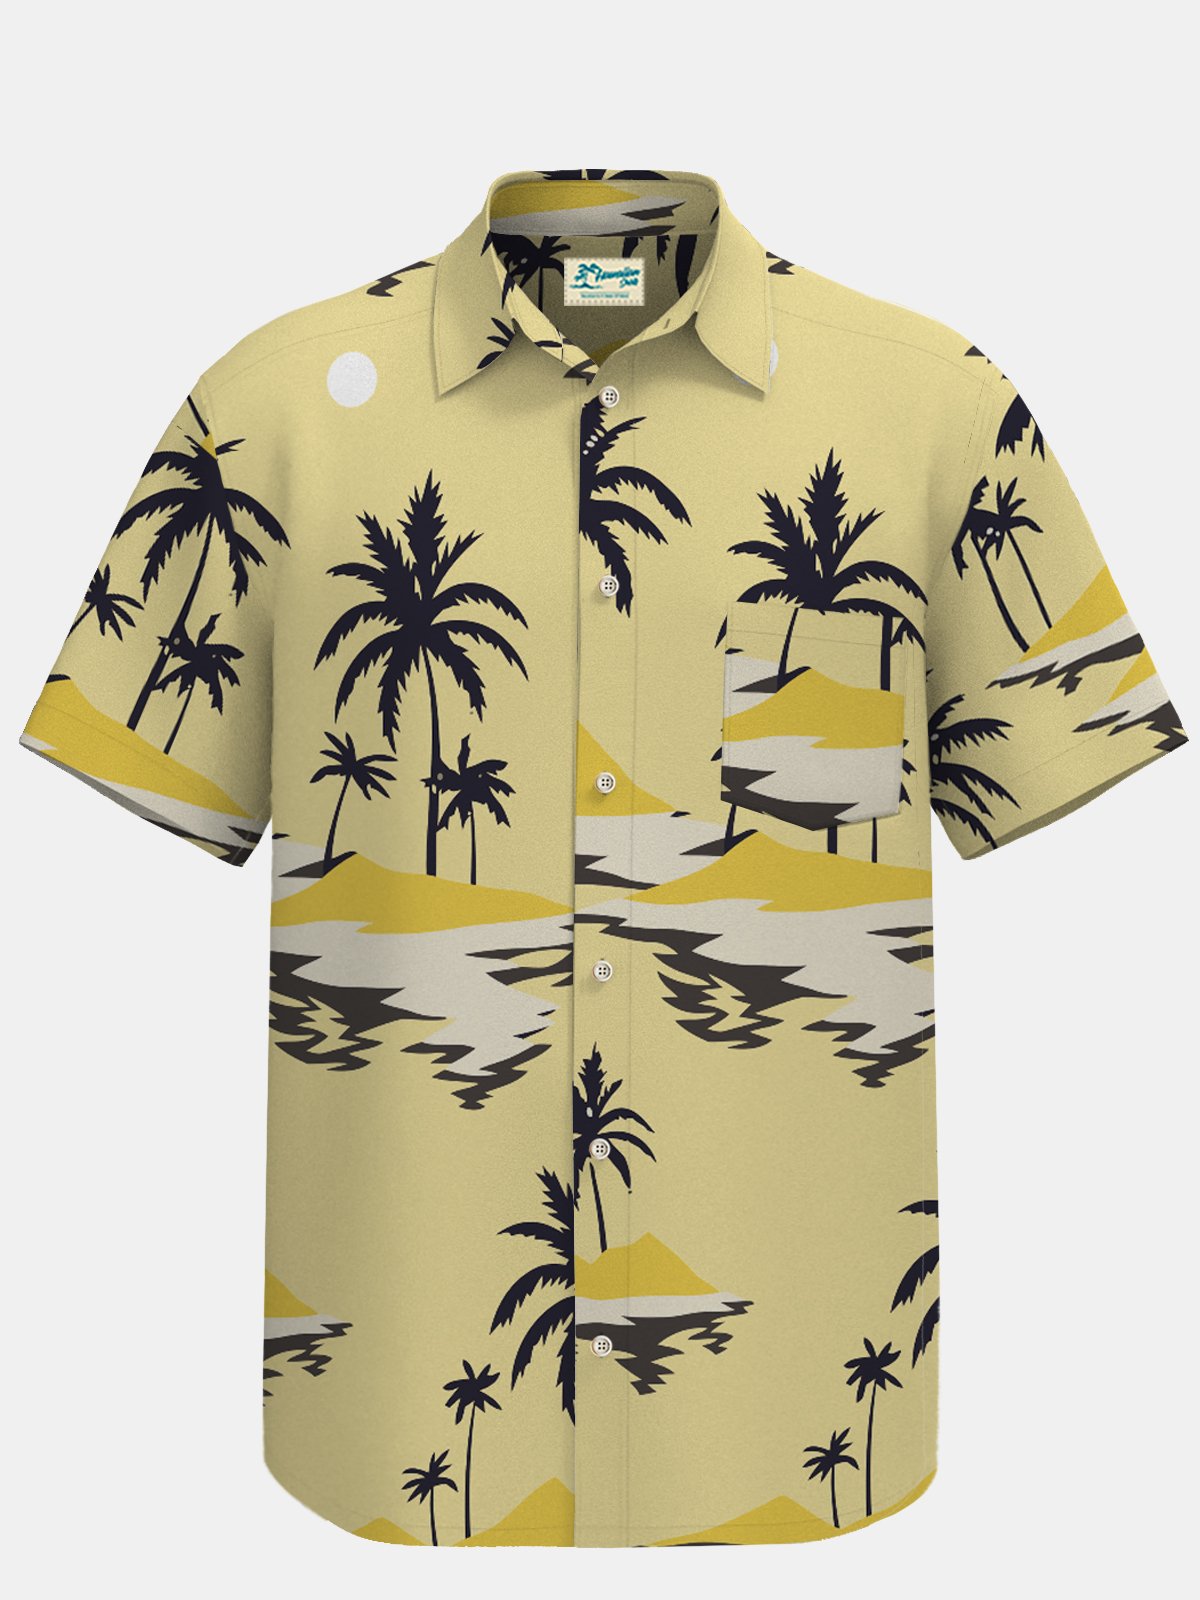 Royaura Waterproof Coconut Tree Hawaiian Shirt Stain-Resistant Hydrophobic Beach Shirt